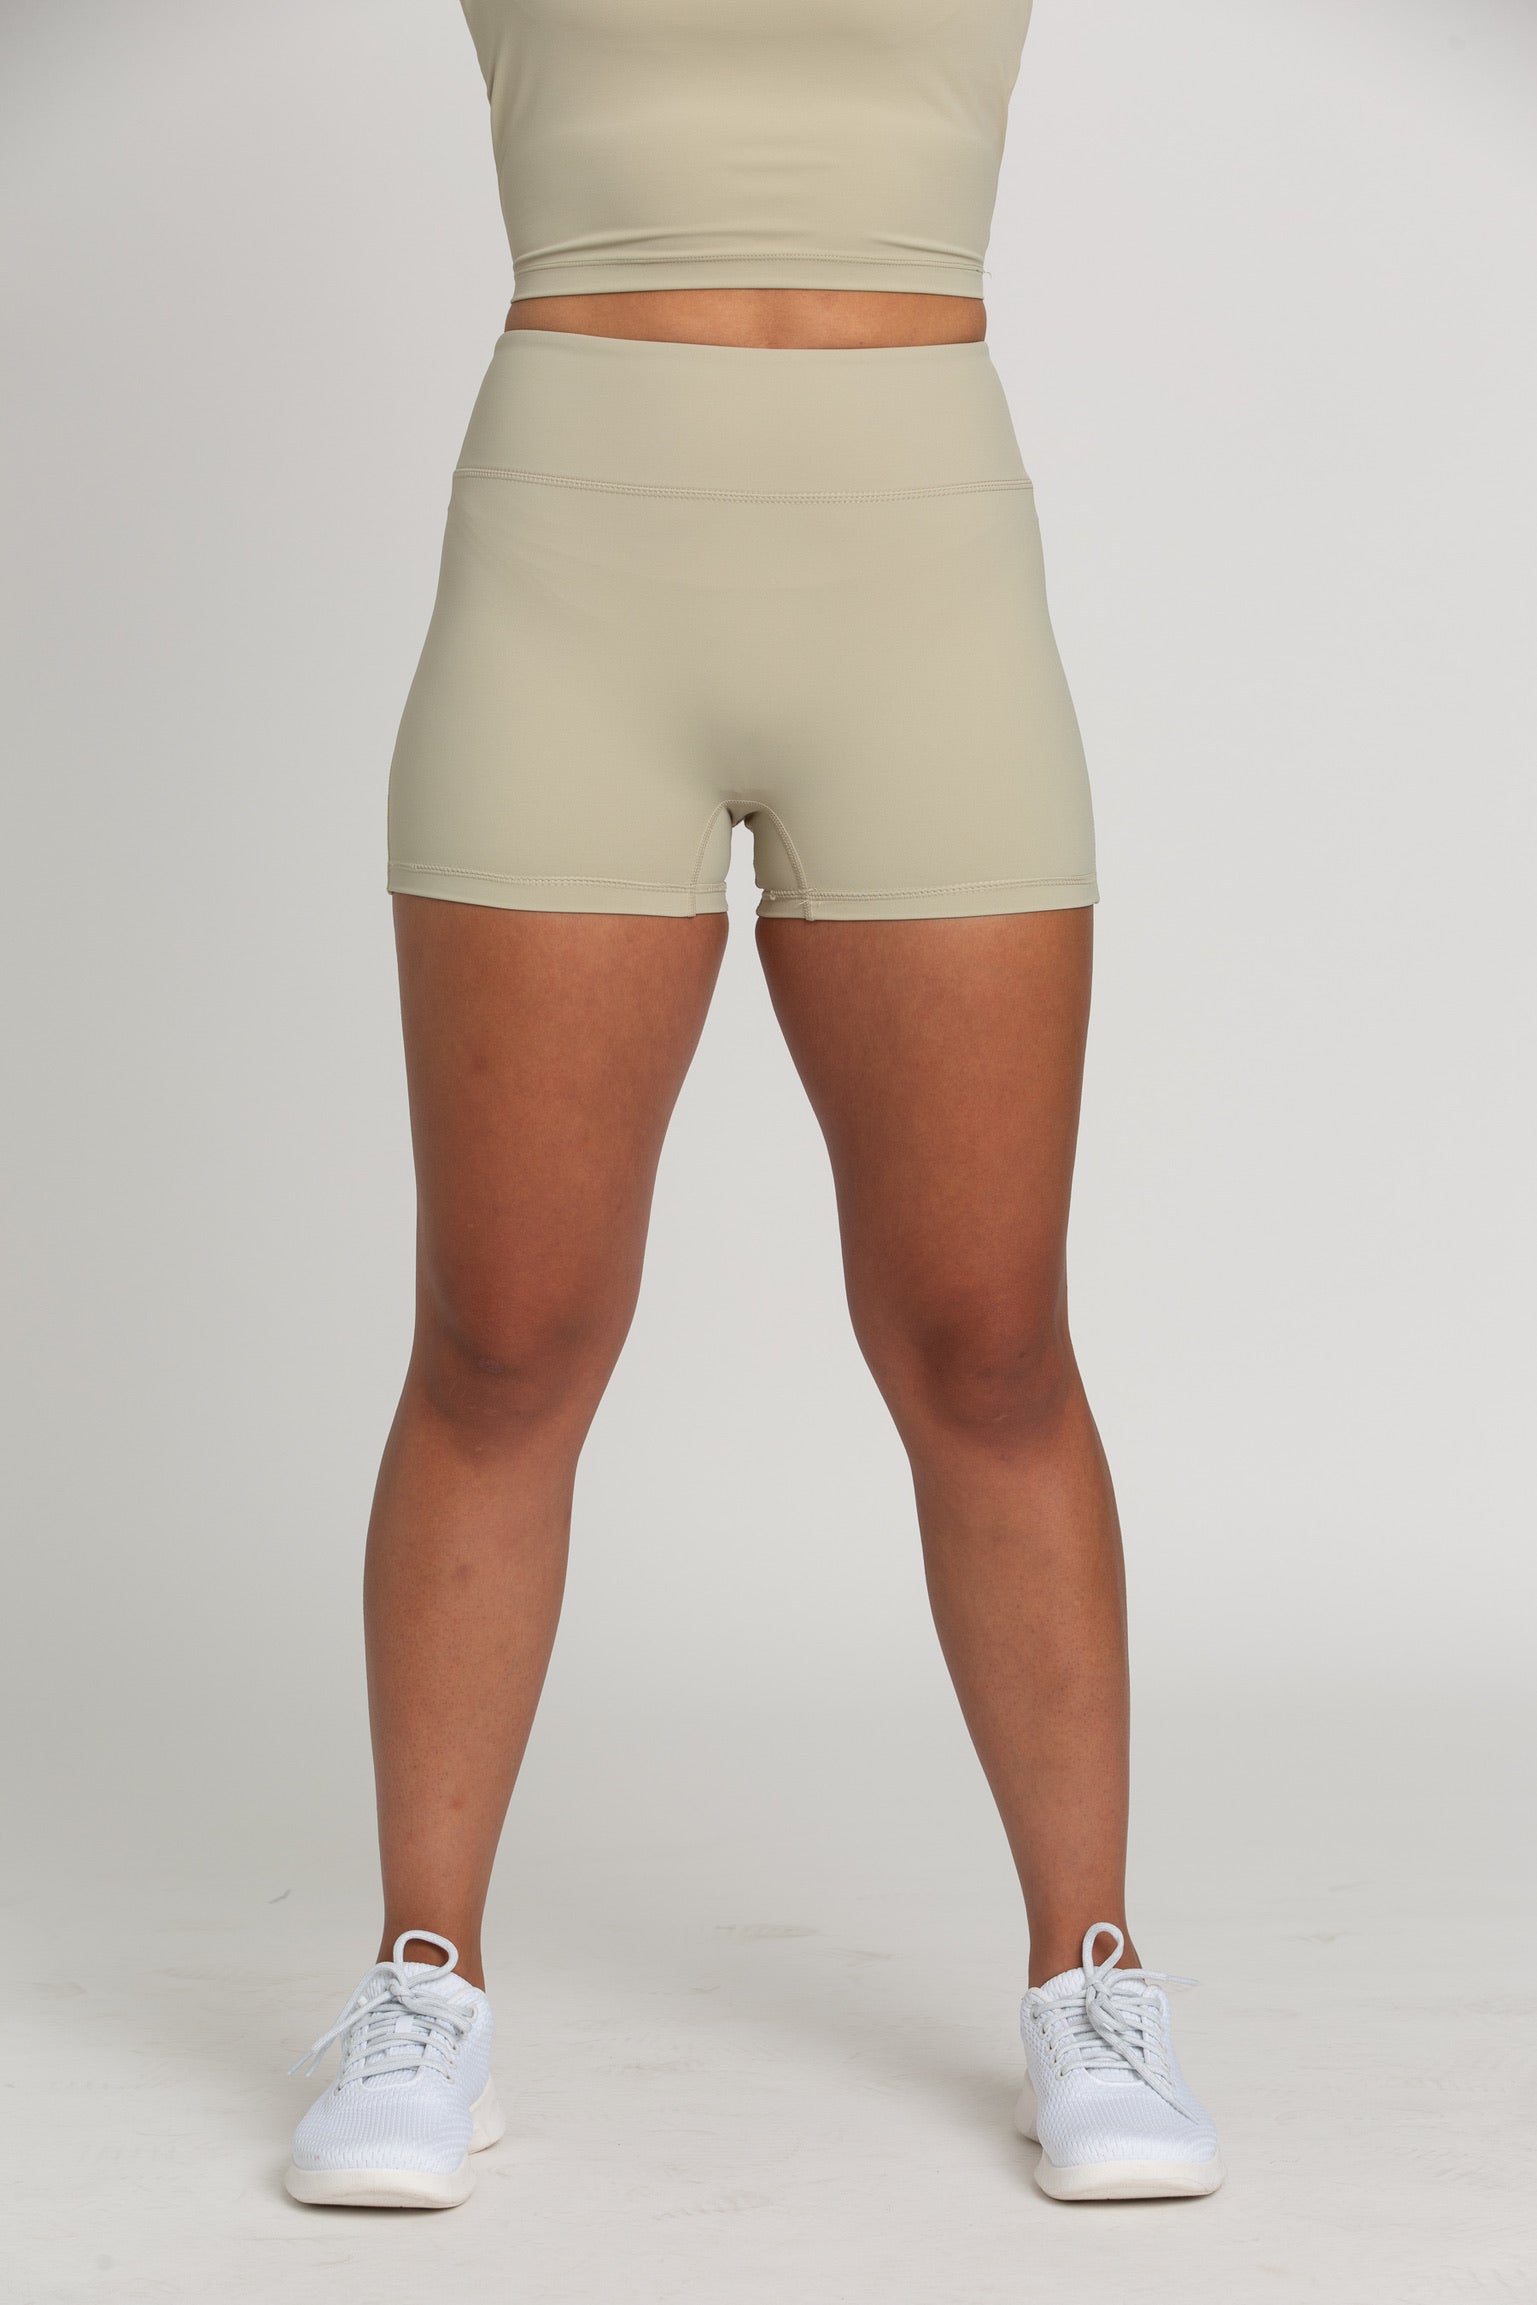 Pale Moss Zipper Spandex Shorts